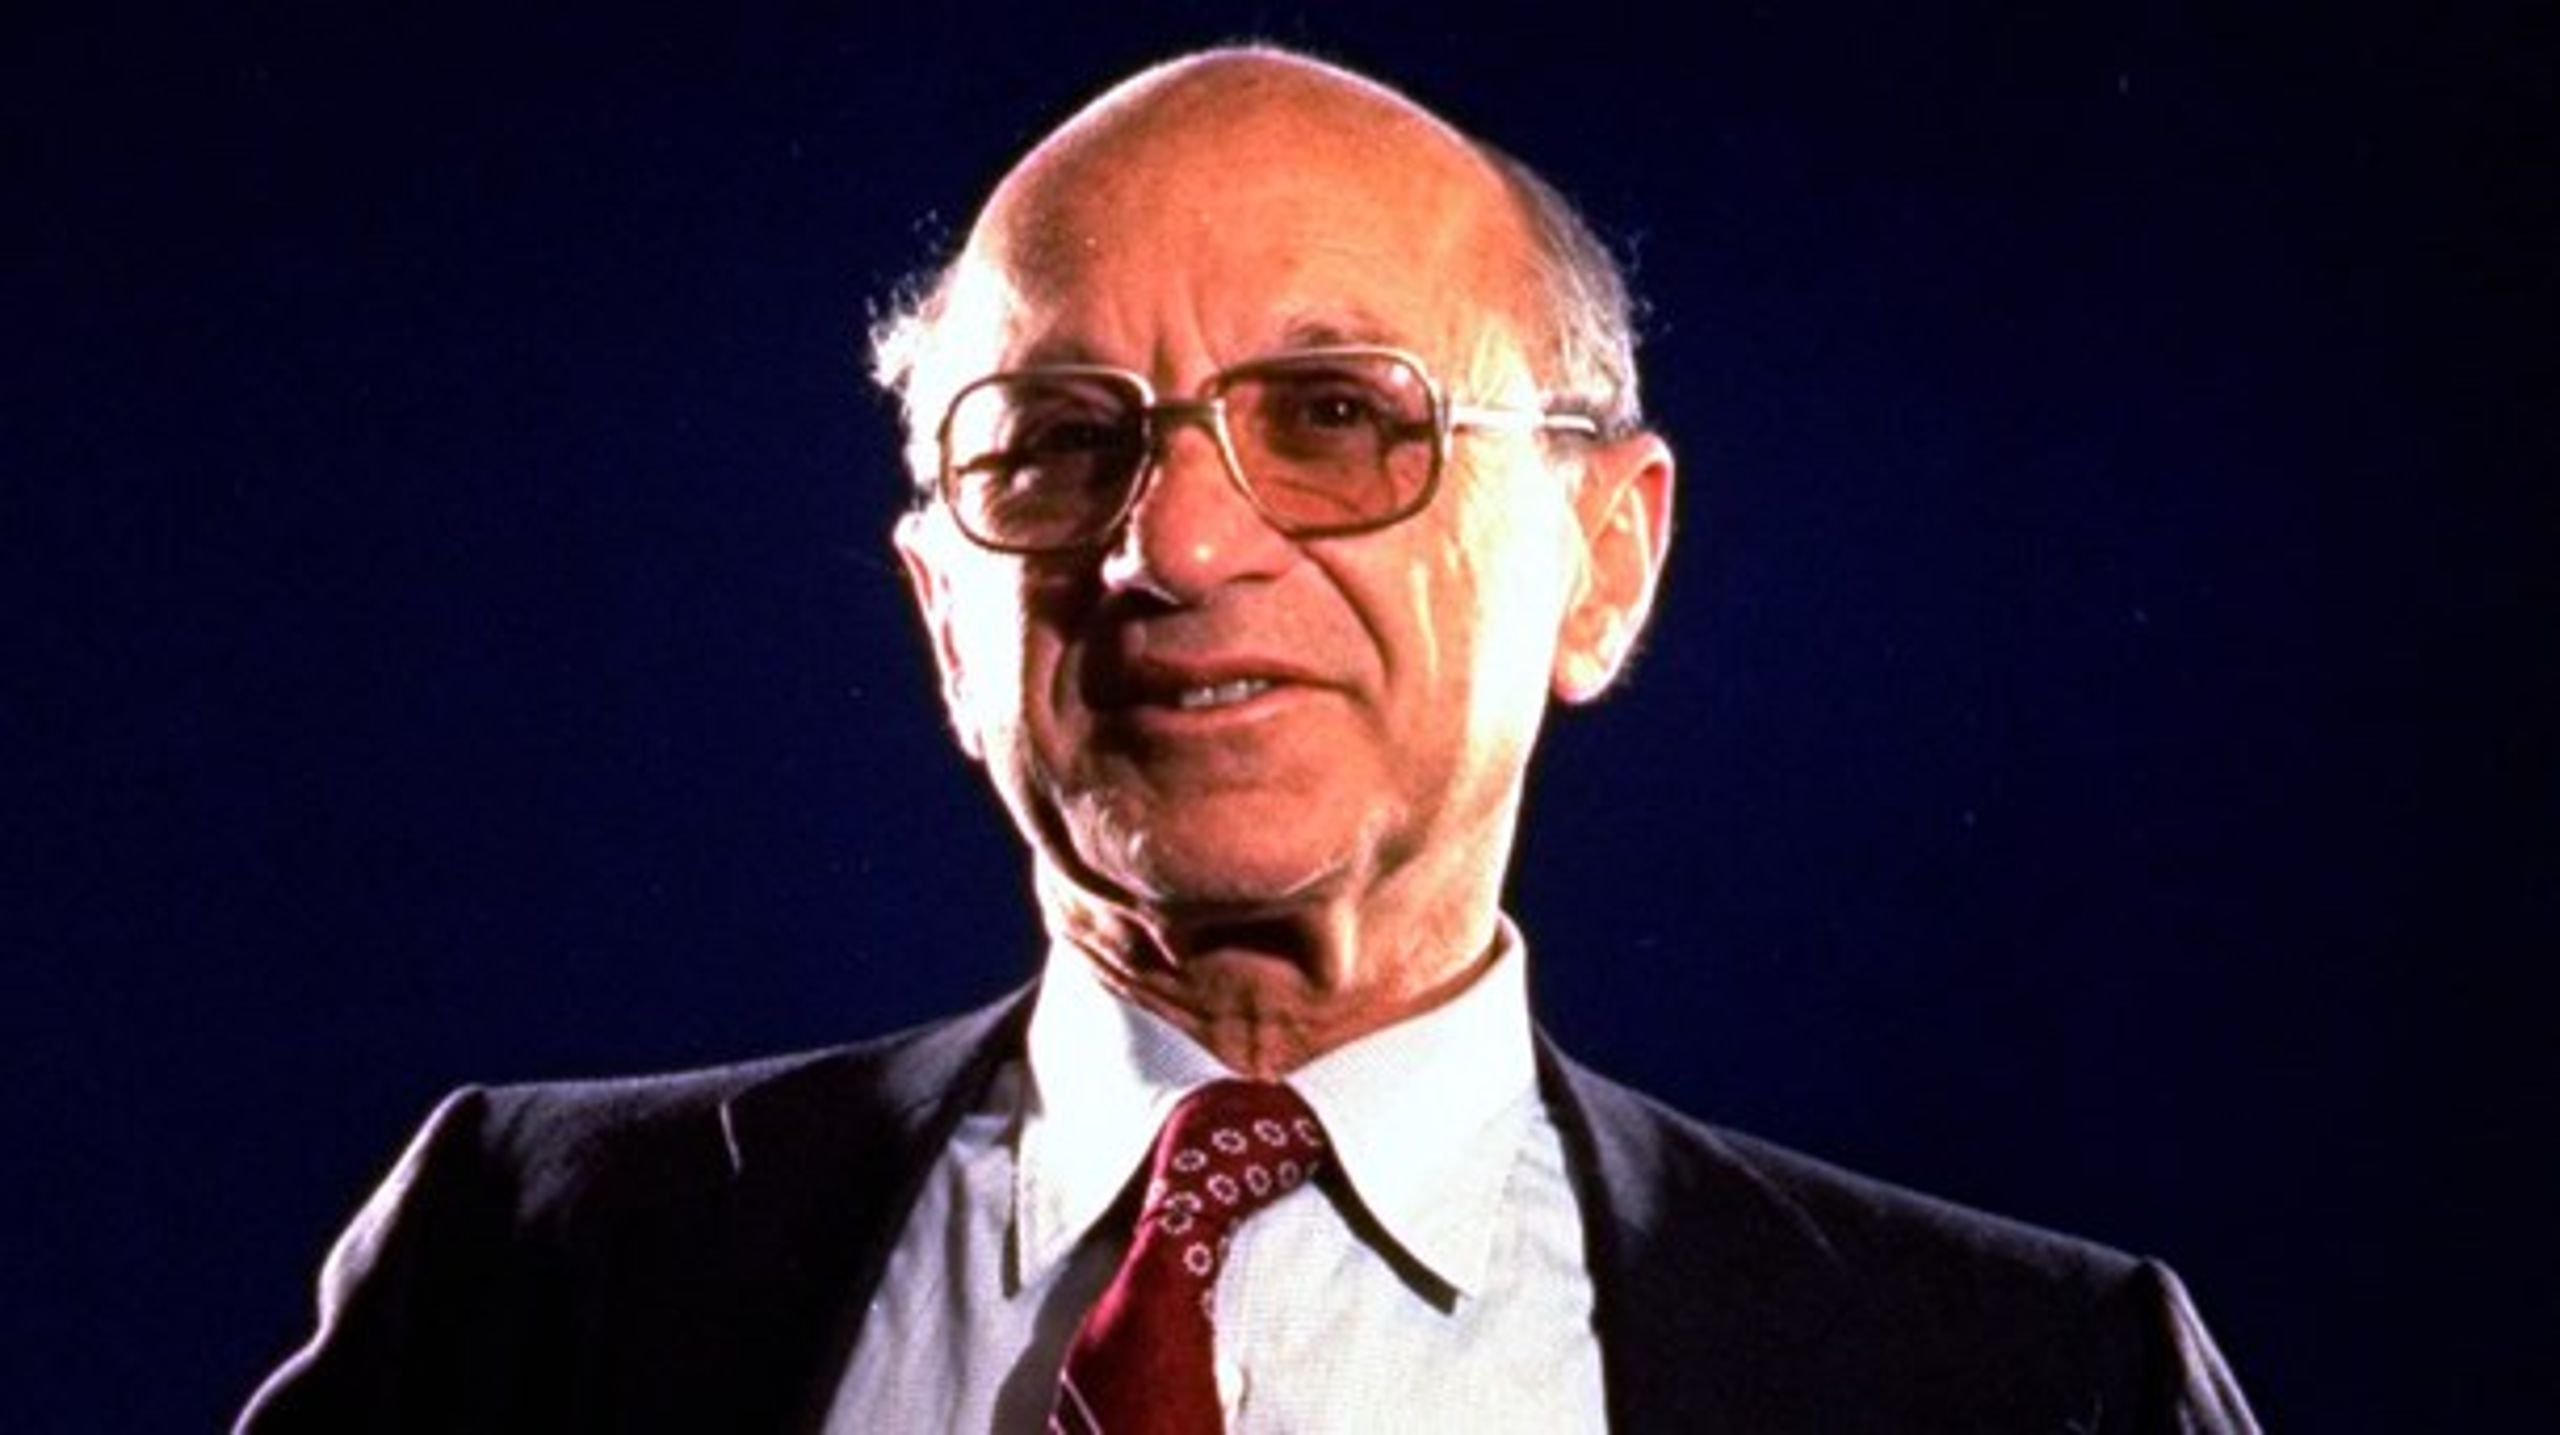 Milton Friedman, nobelpristager i økonomi (1976), og manden bag udtrykket 'There is no such thing as a free lunch'.